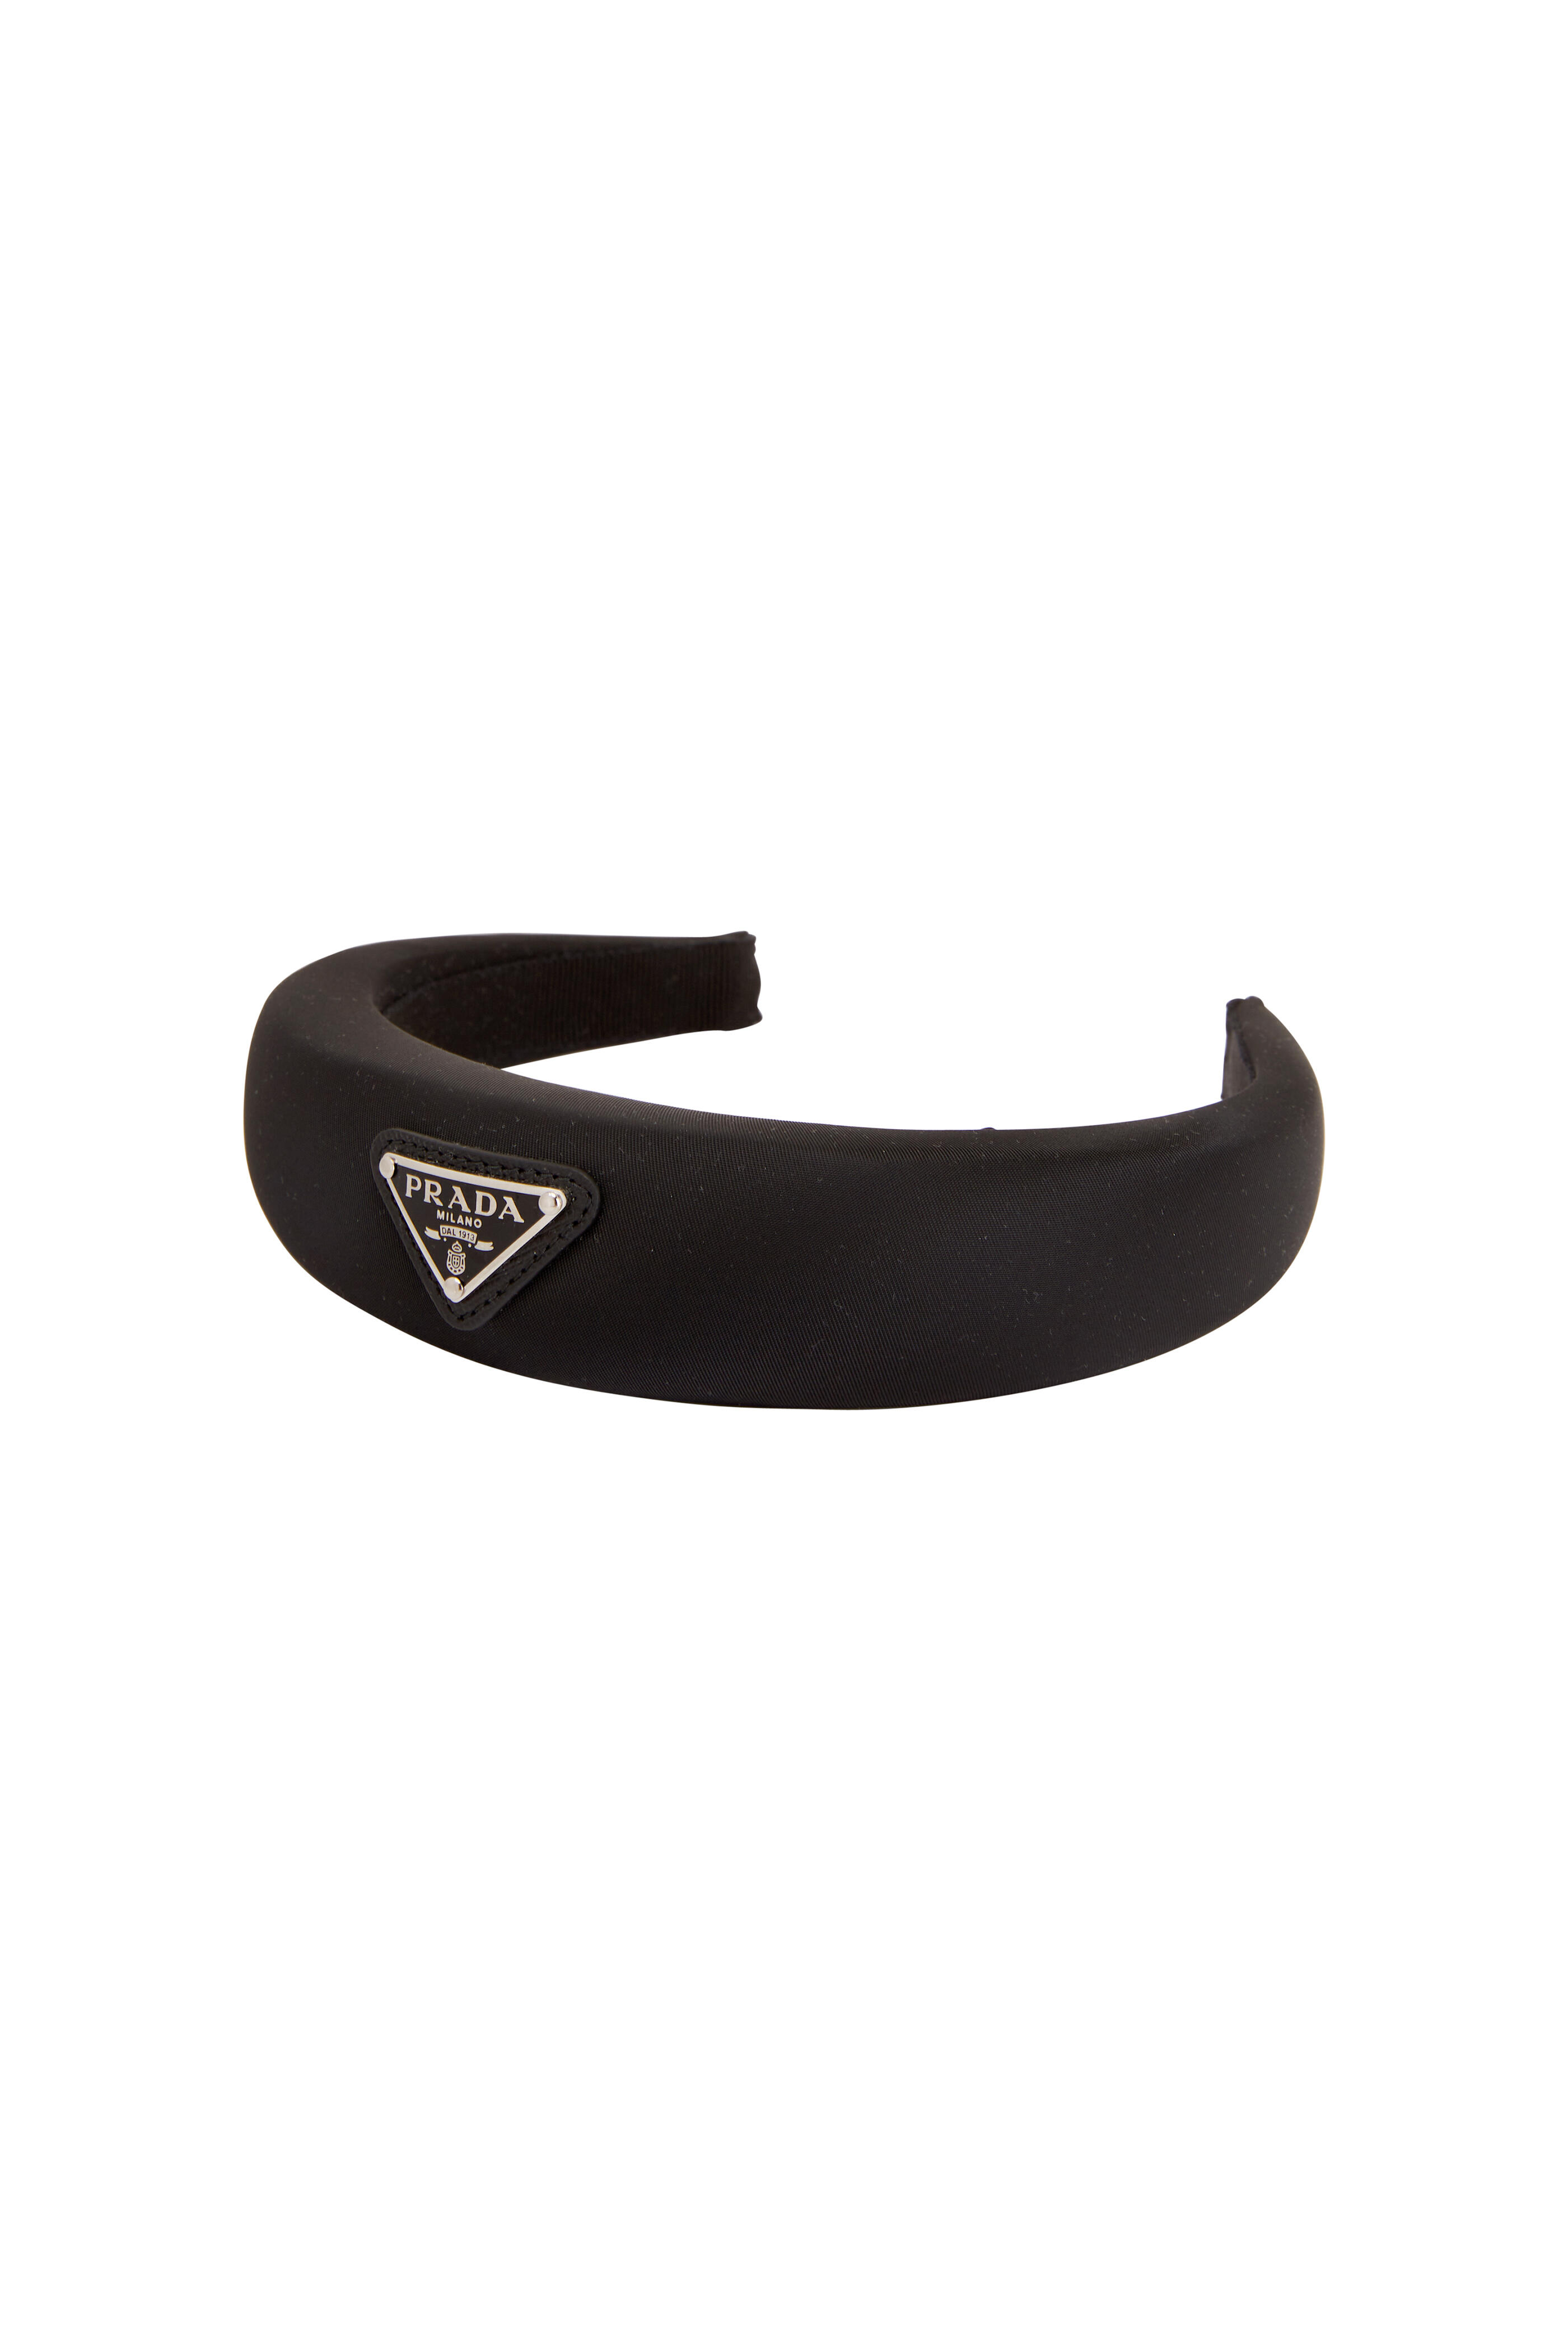 Prada   Tessuto Black Logo Headband   Mitchell Stores